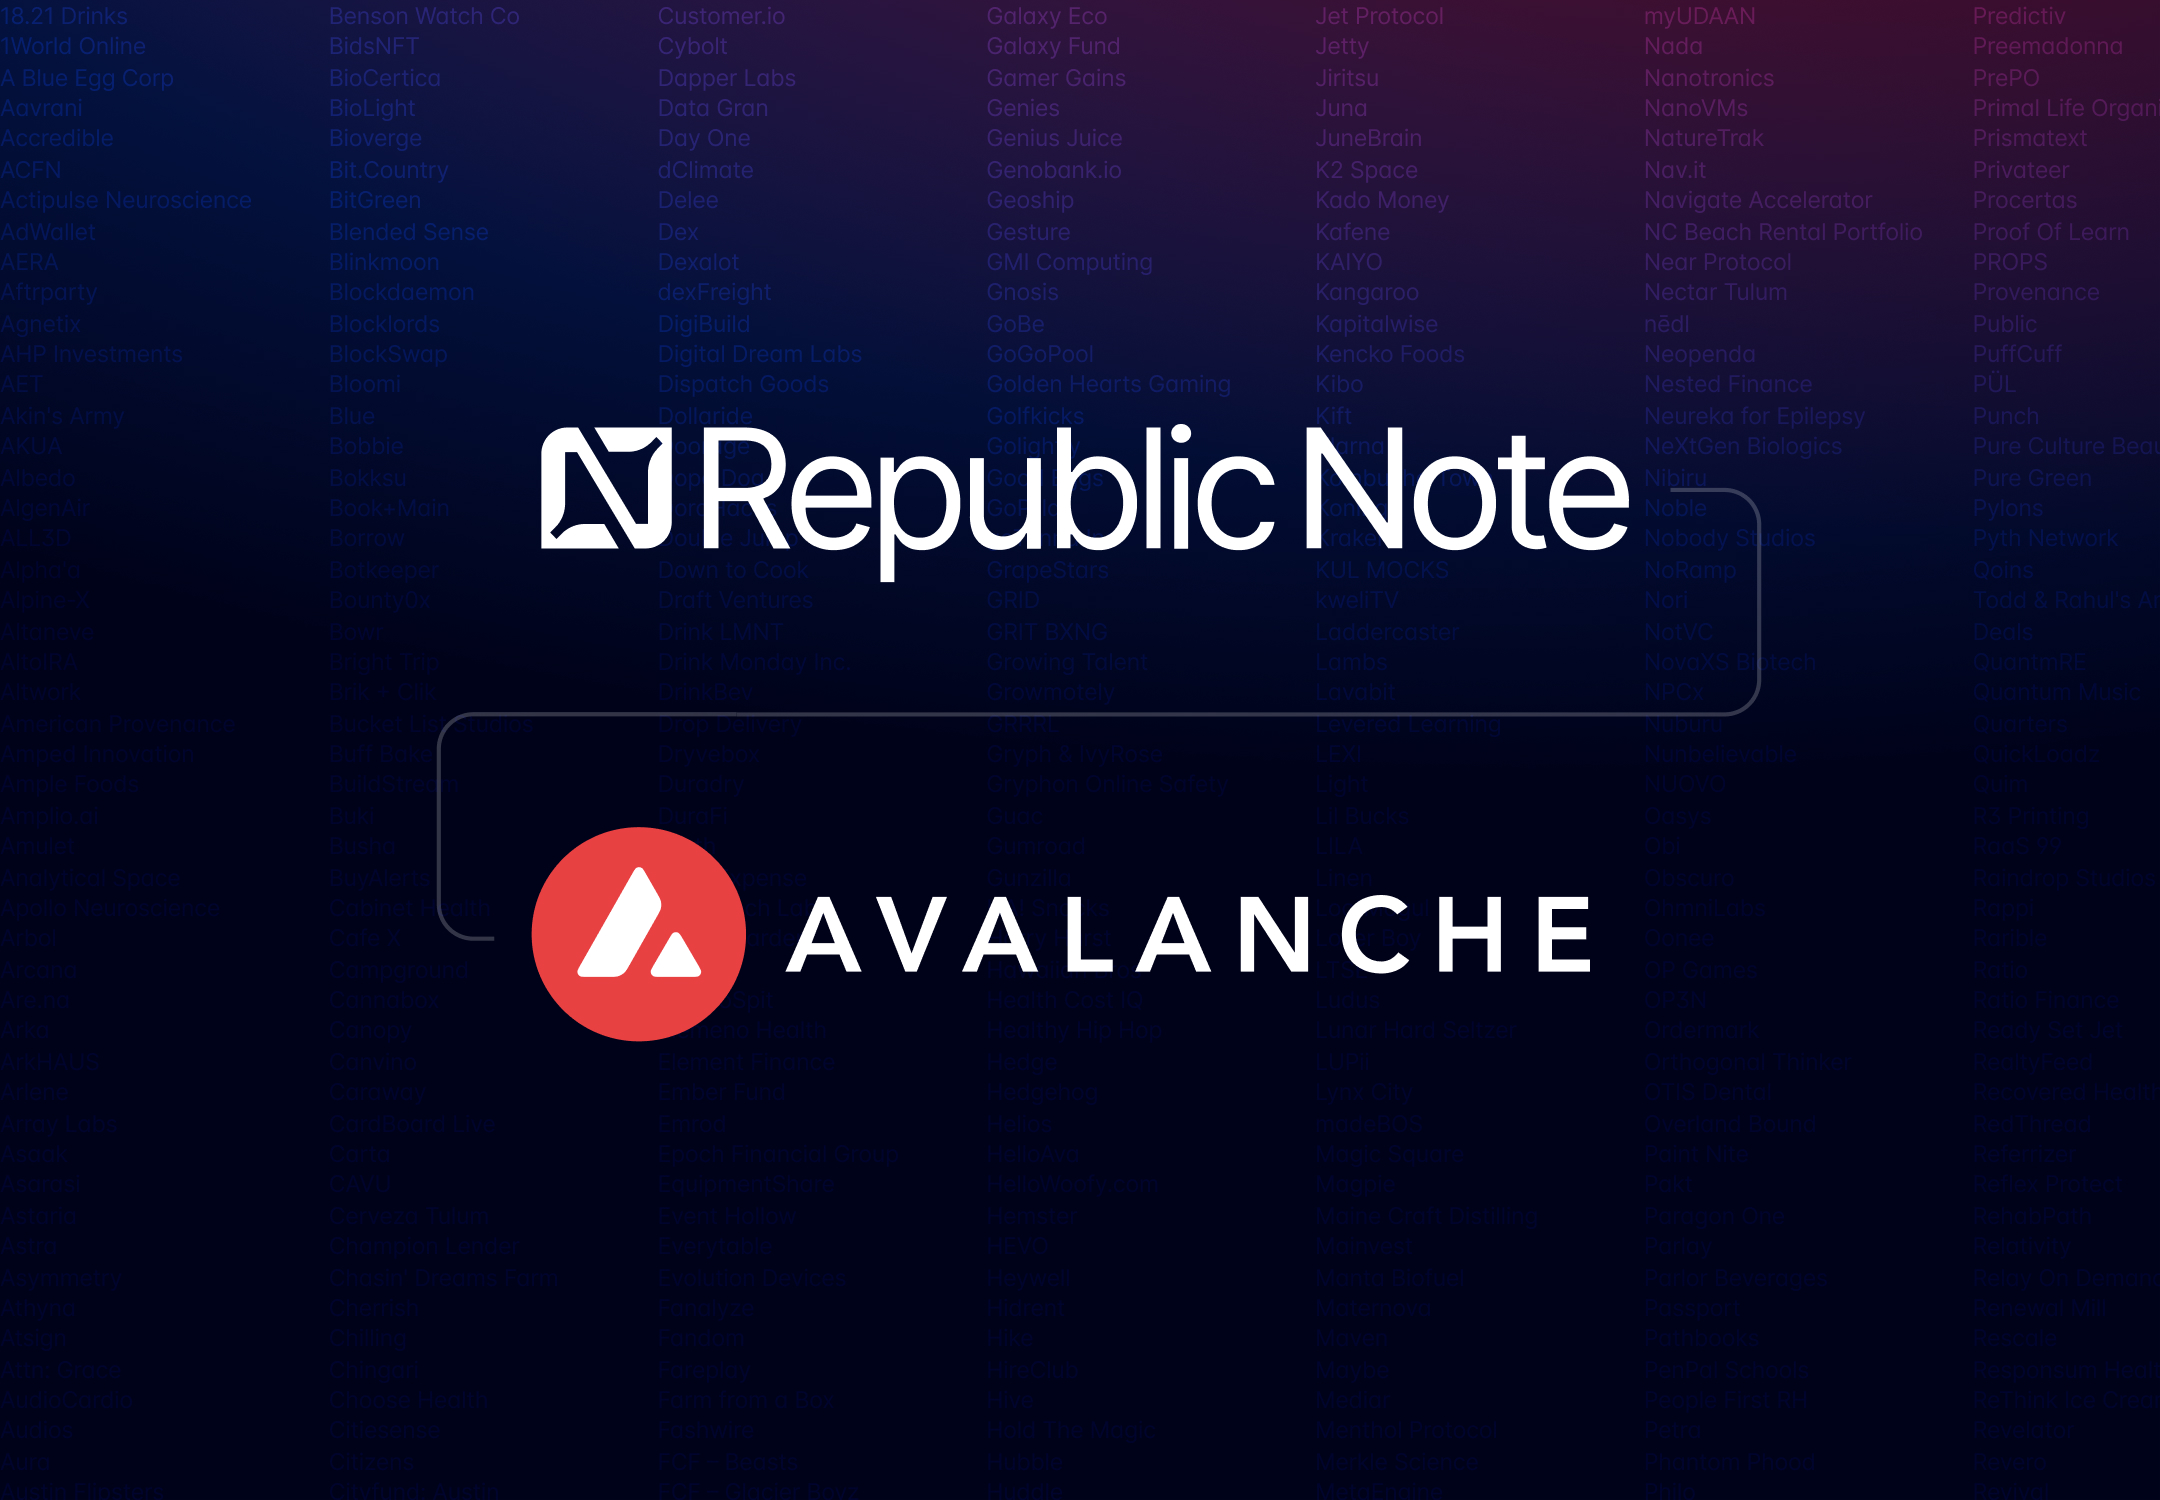 Republic Note To ‘Go Public’ via ICO on December 6th In Major Liquidity Event for Investors